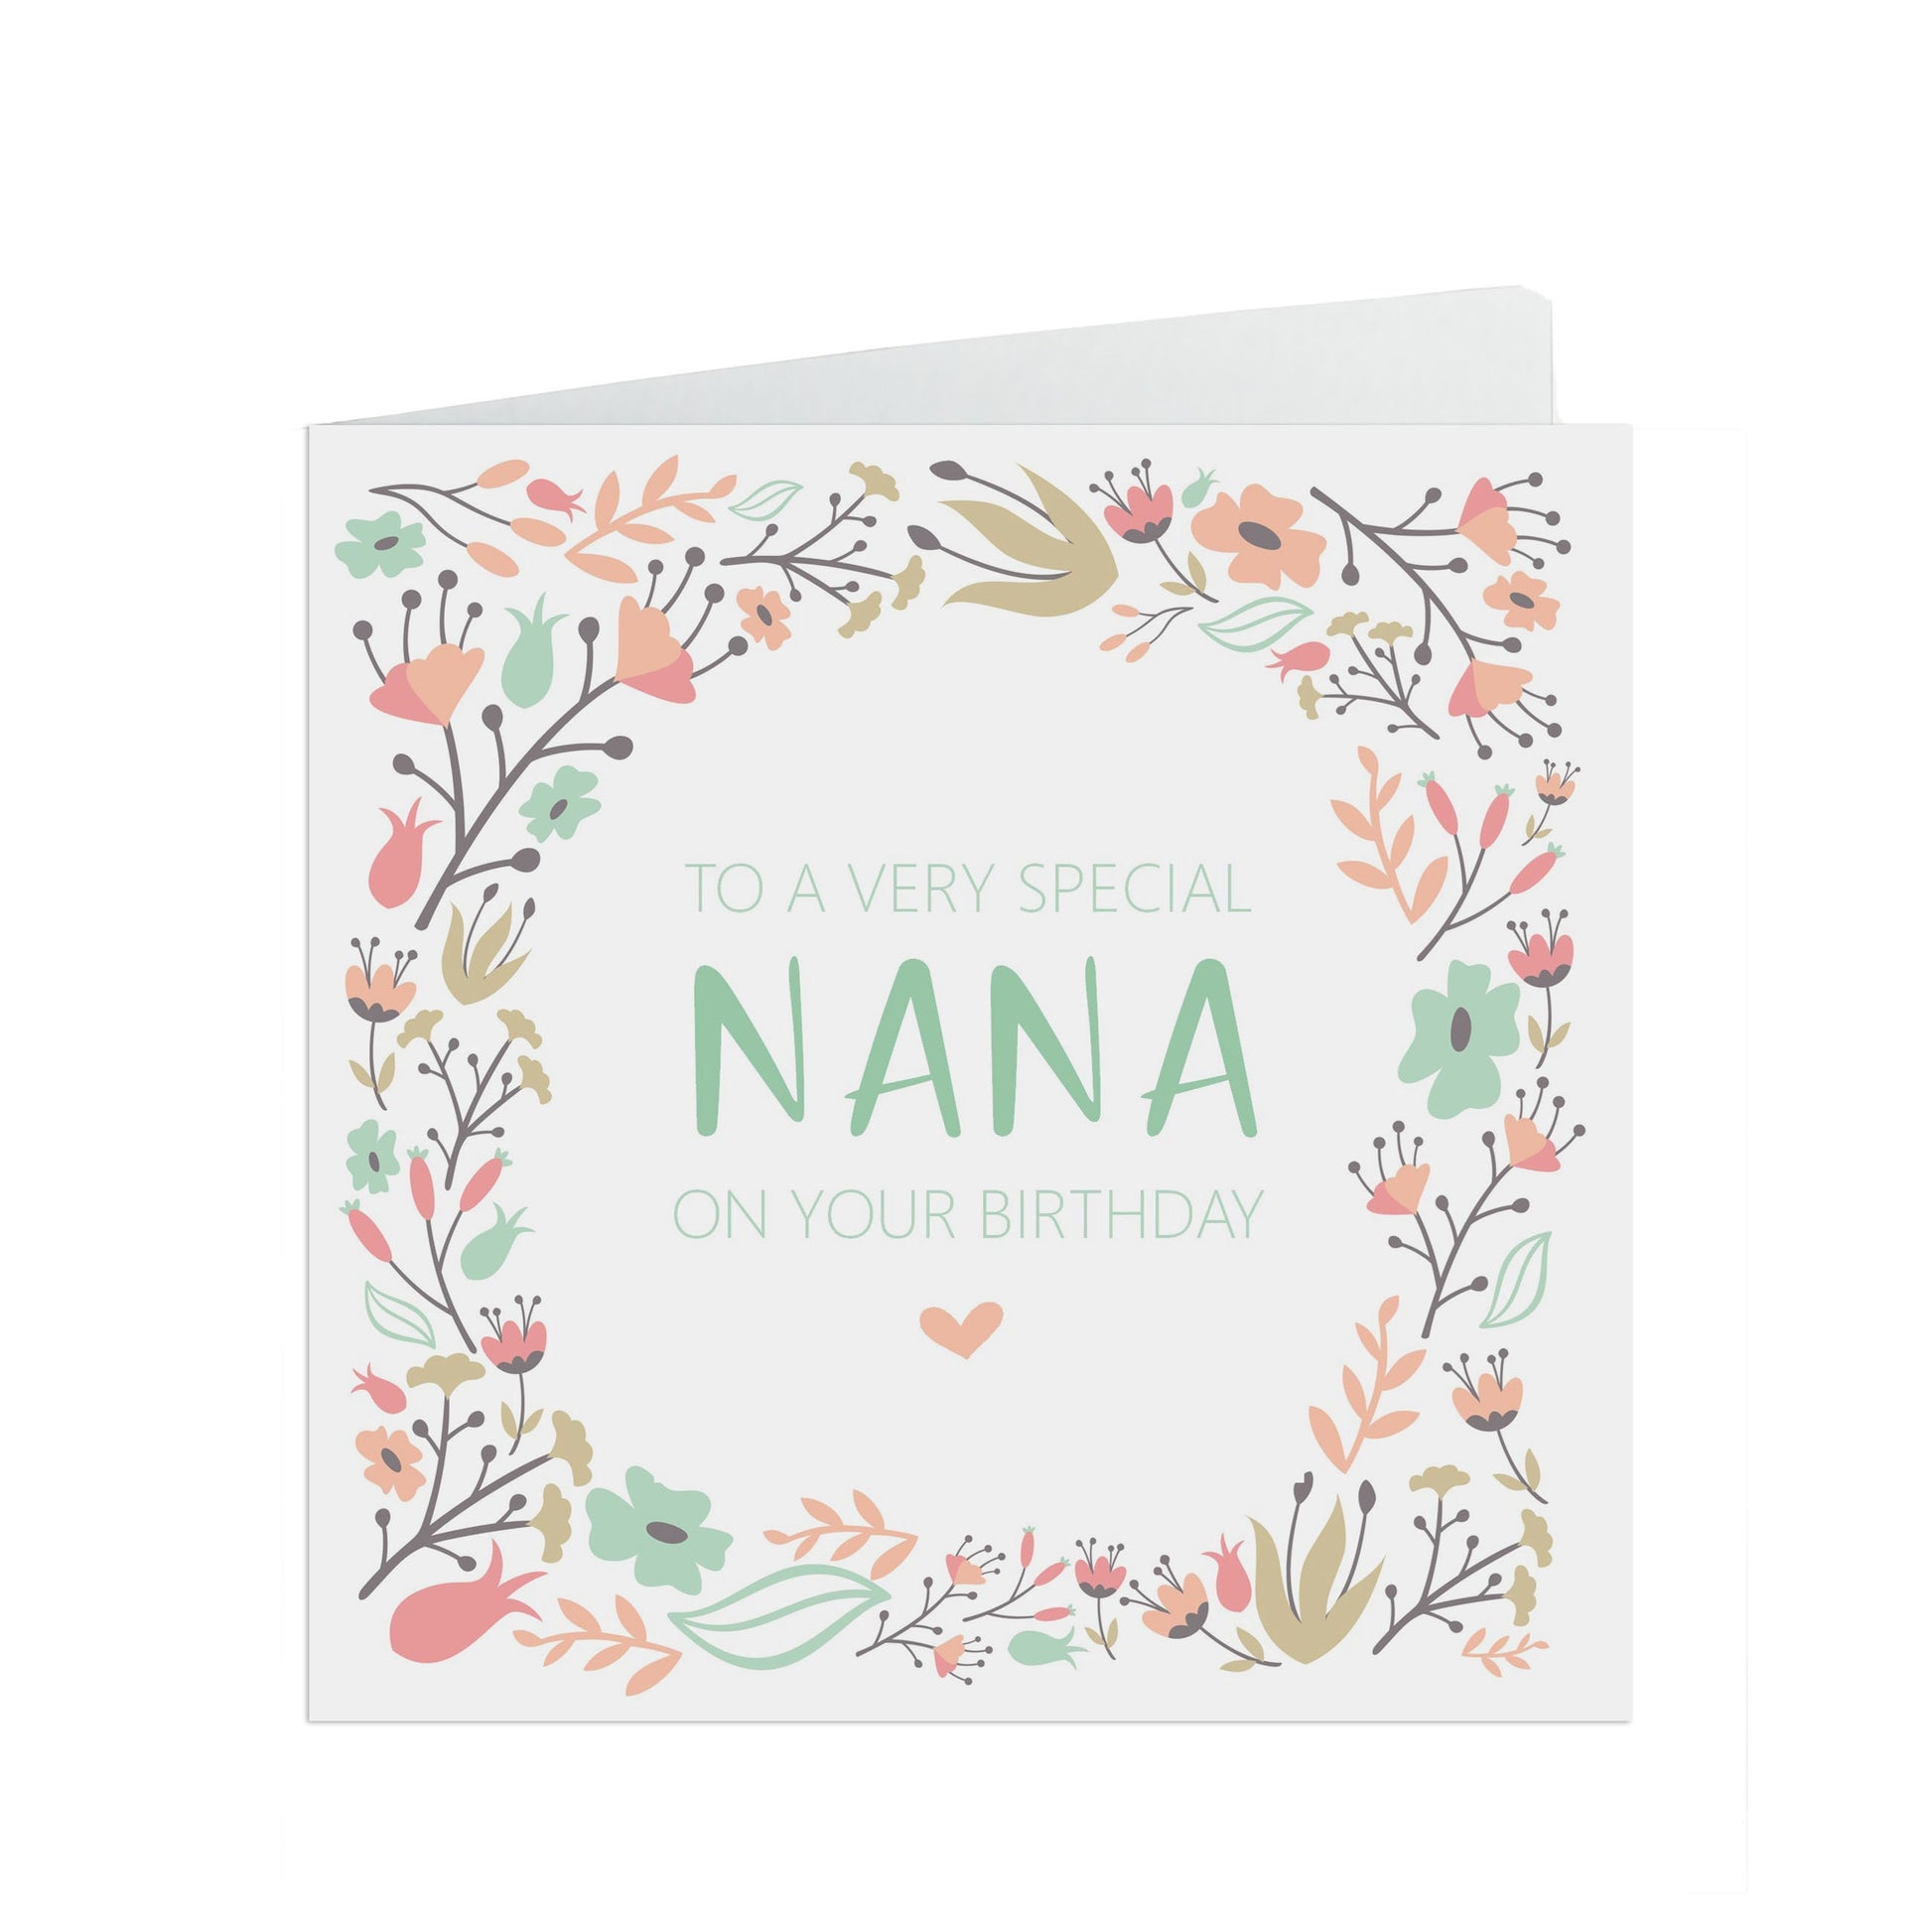 Nana Birthday Card, Sage & Peach Flower Design